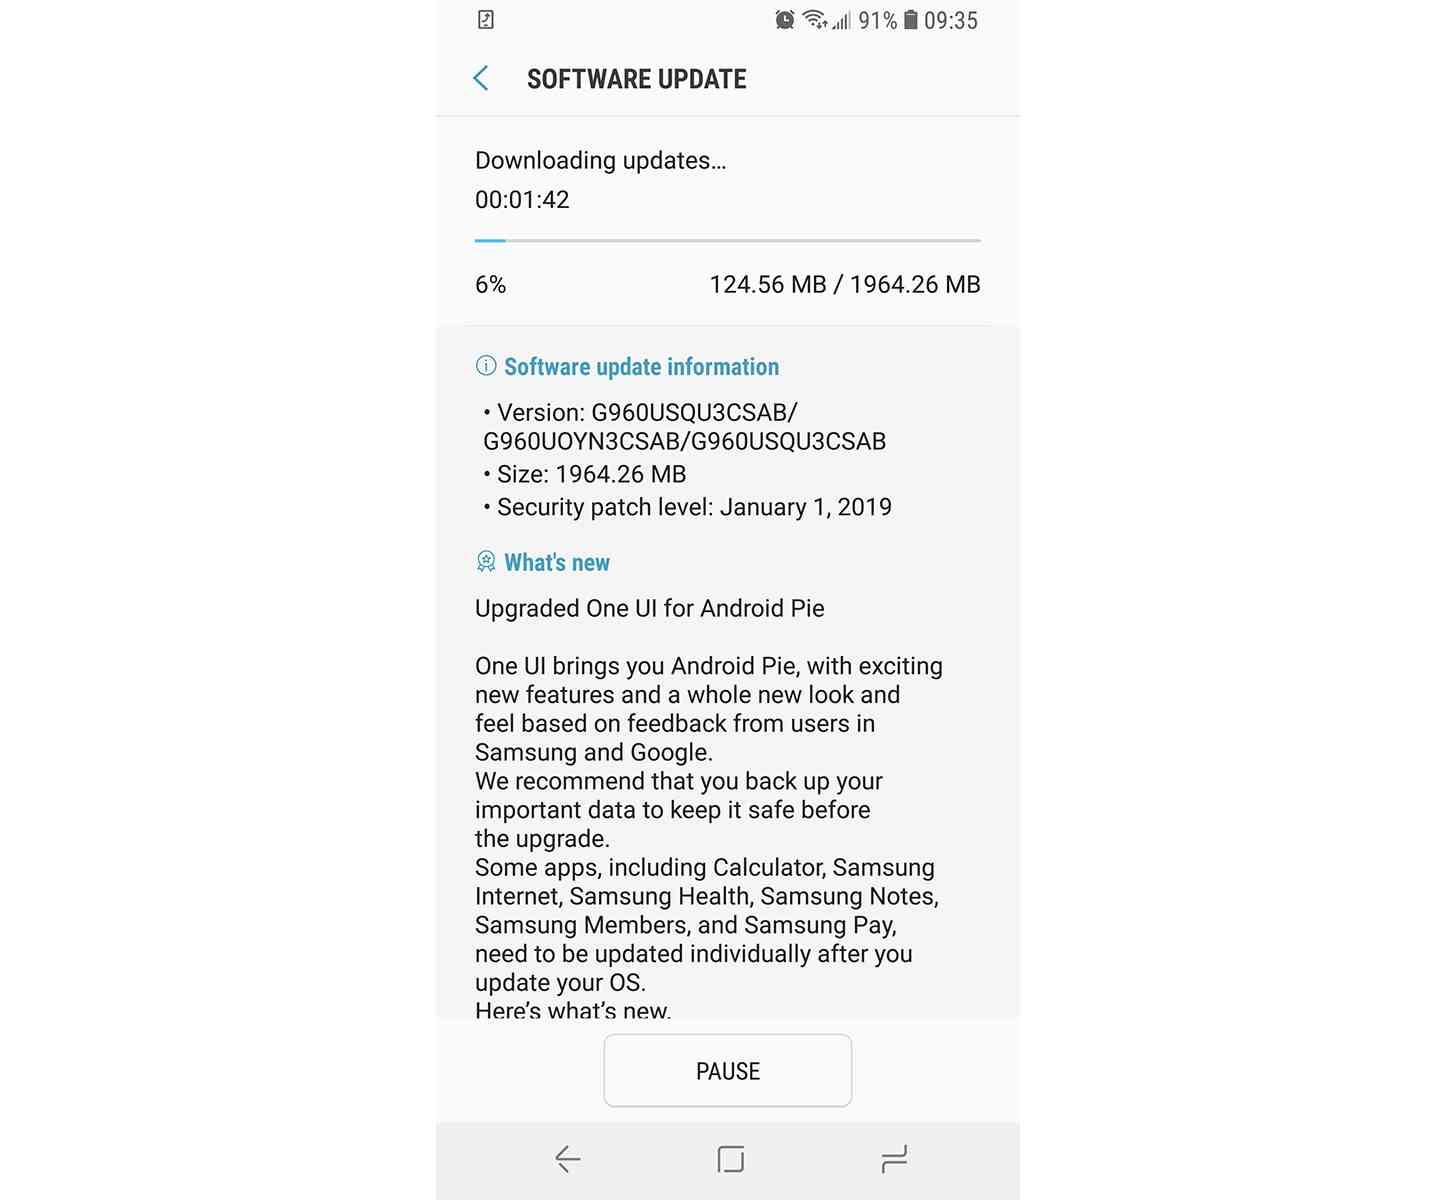 Samsung Galaxy S9 Android Pie update